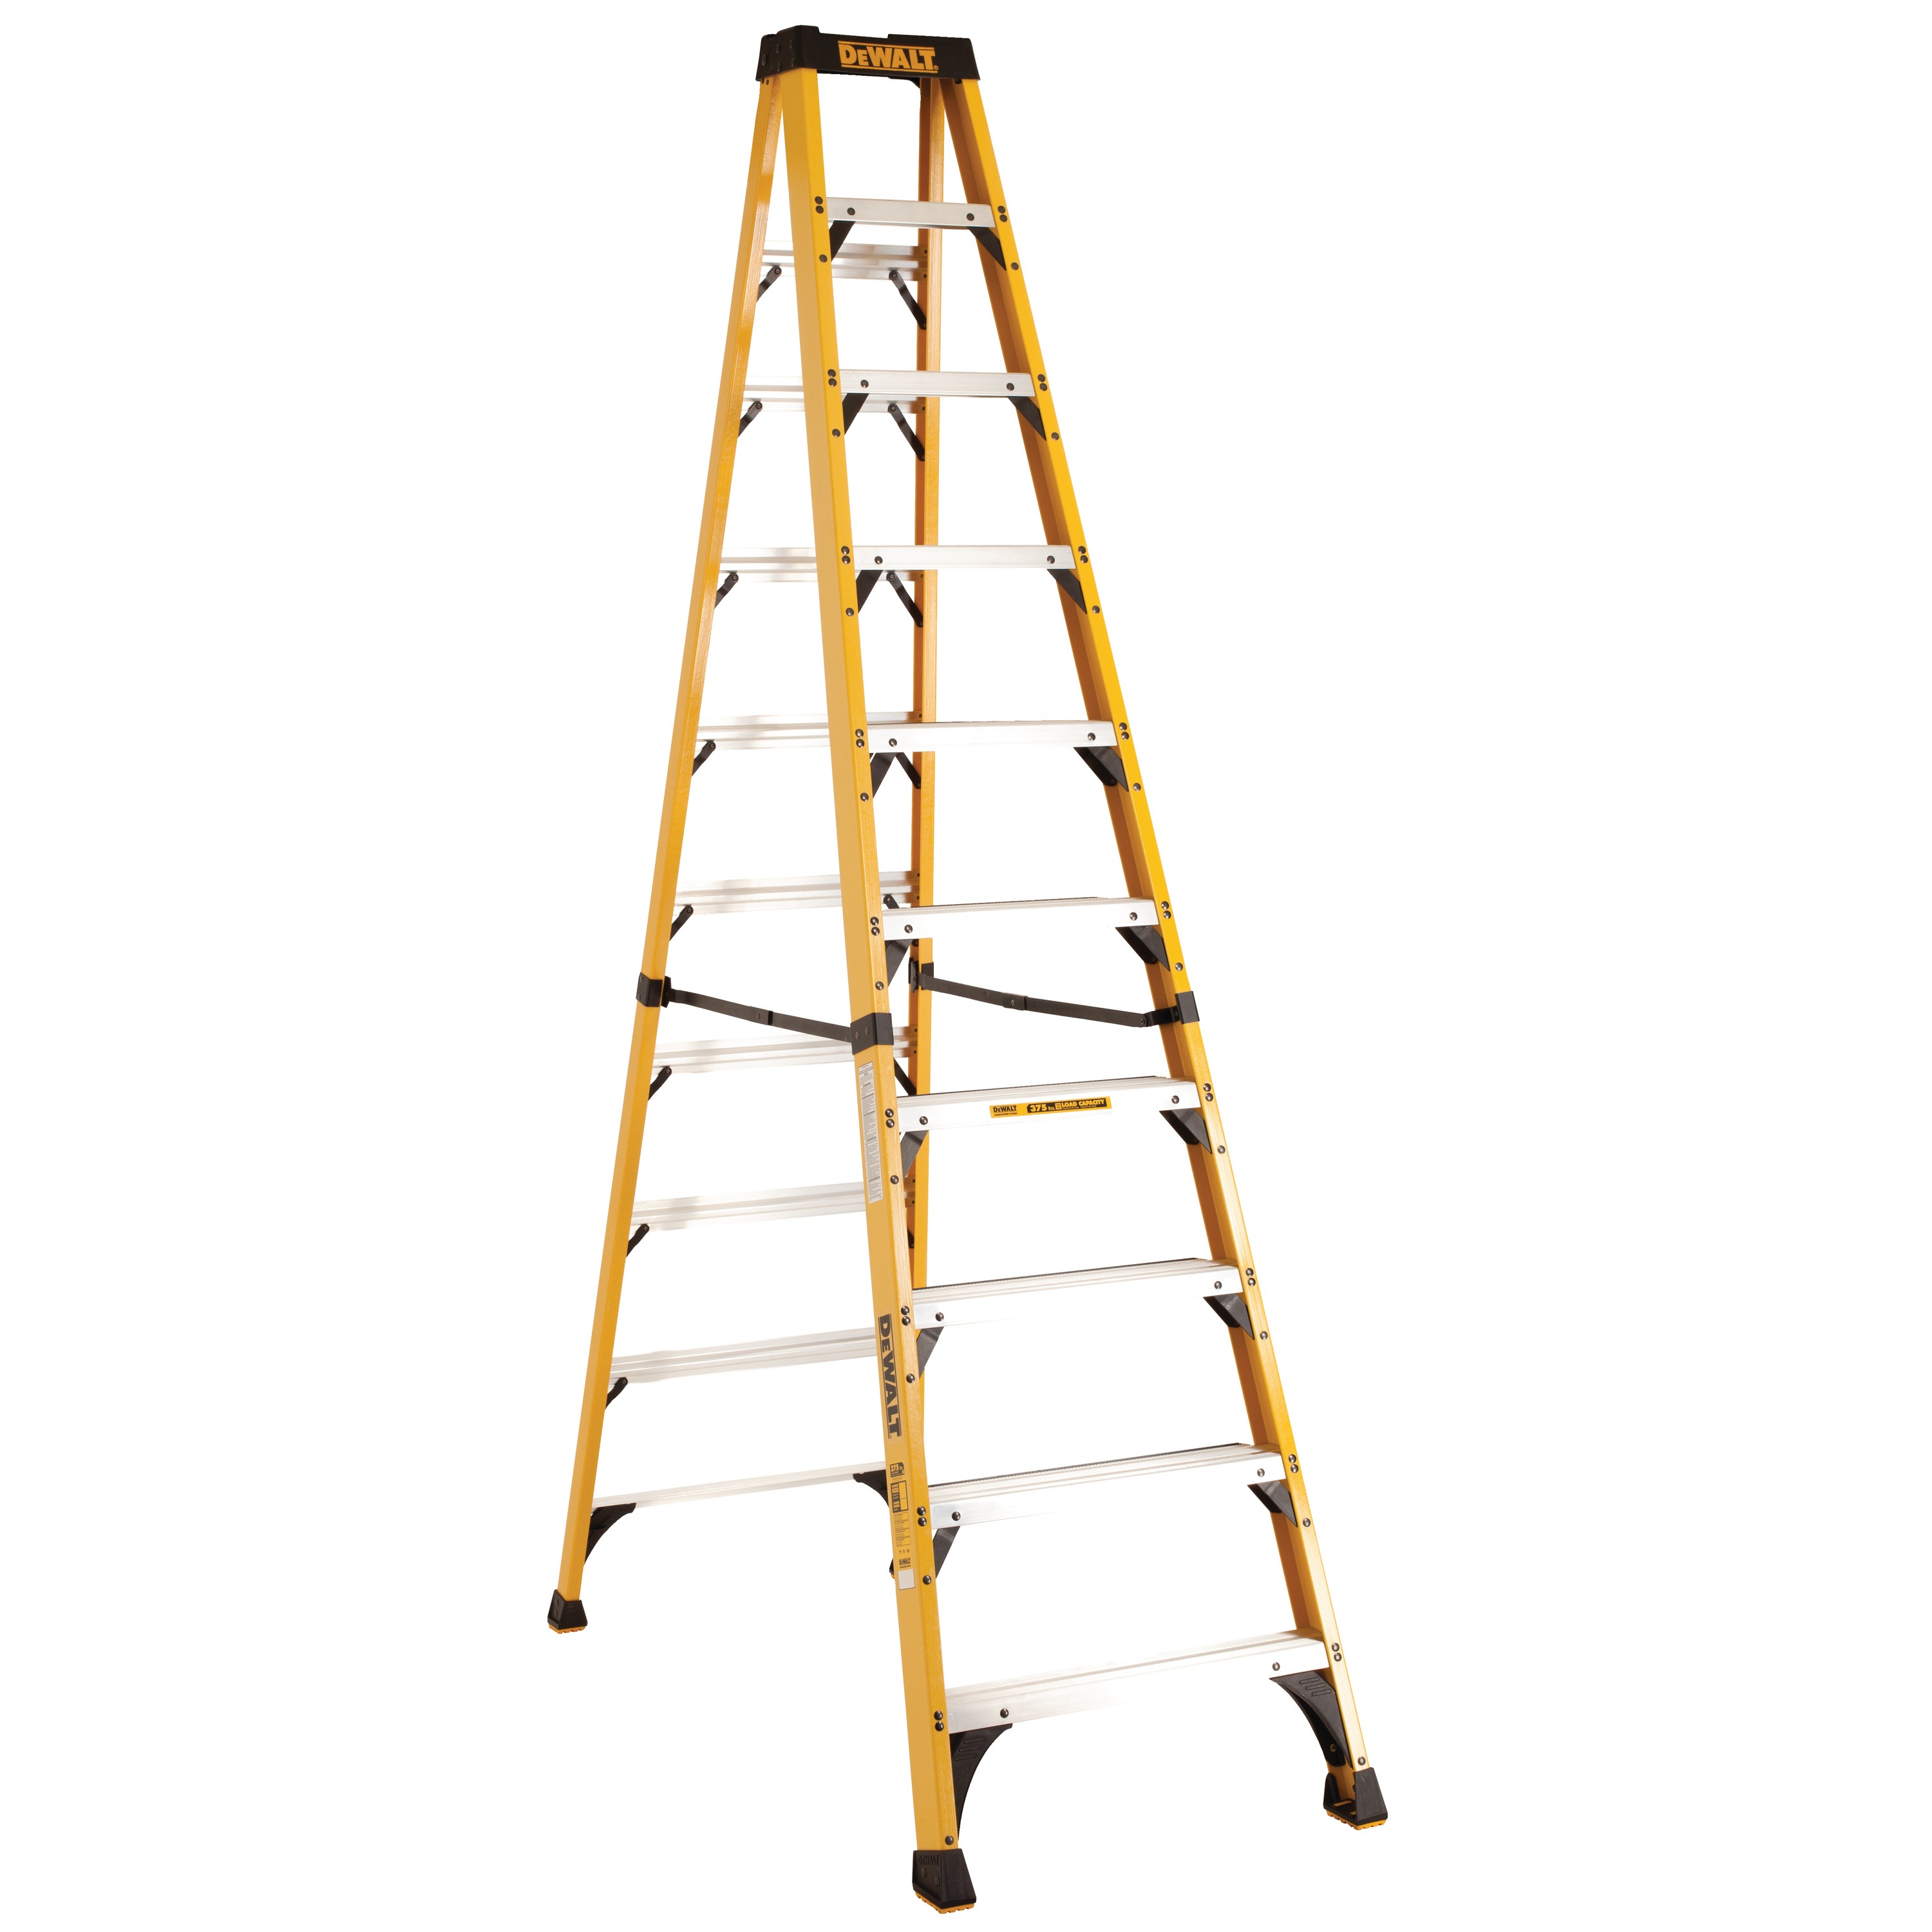 10 foot Fiberglass Step Ladder 375 pound Load Capacity.